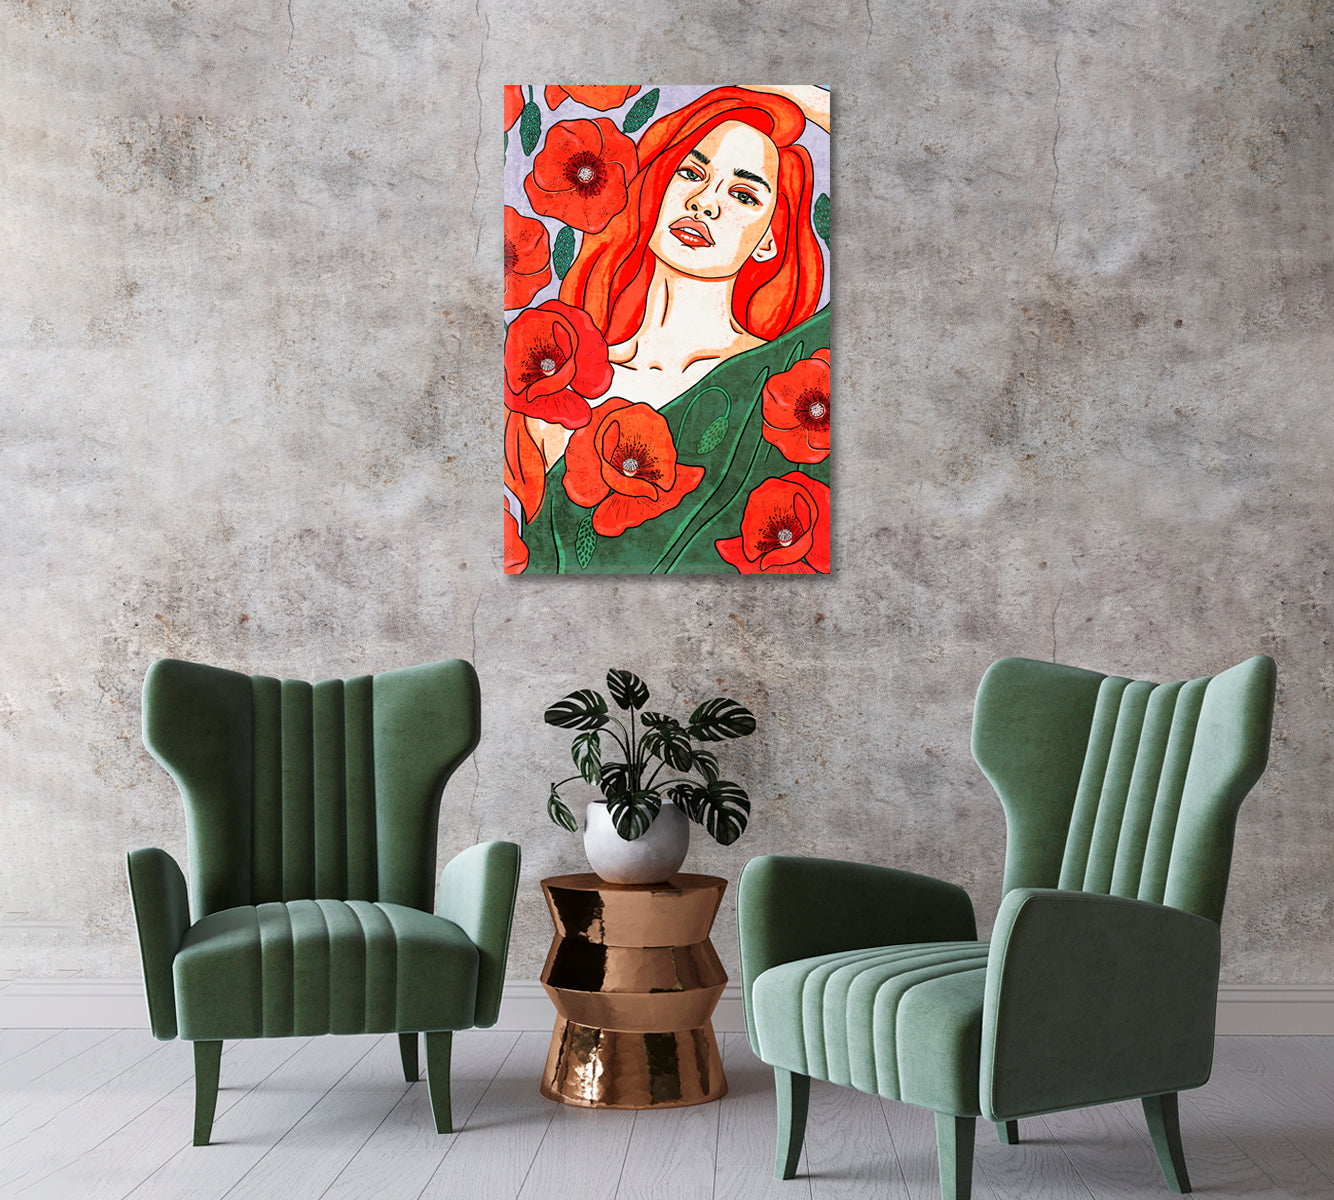 Woman with Poppy Flowers Art Canvas-Canvas Print-CetArt-1 panel-16x24 inches-CetArt